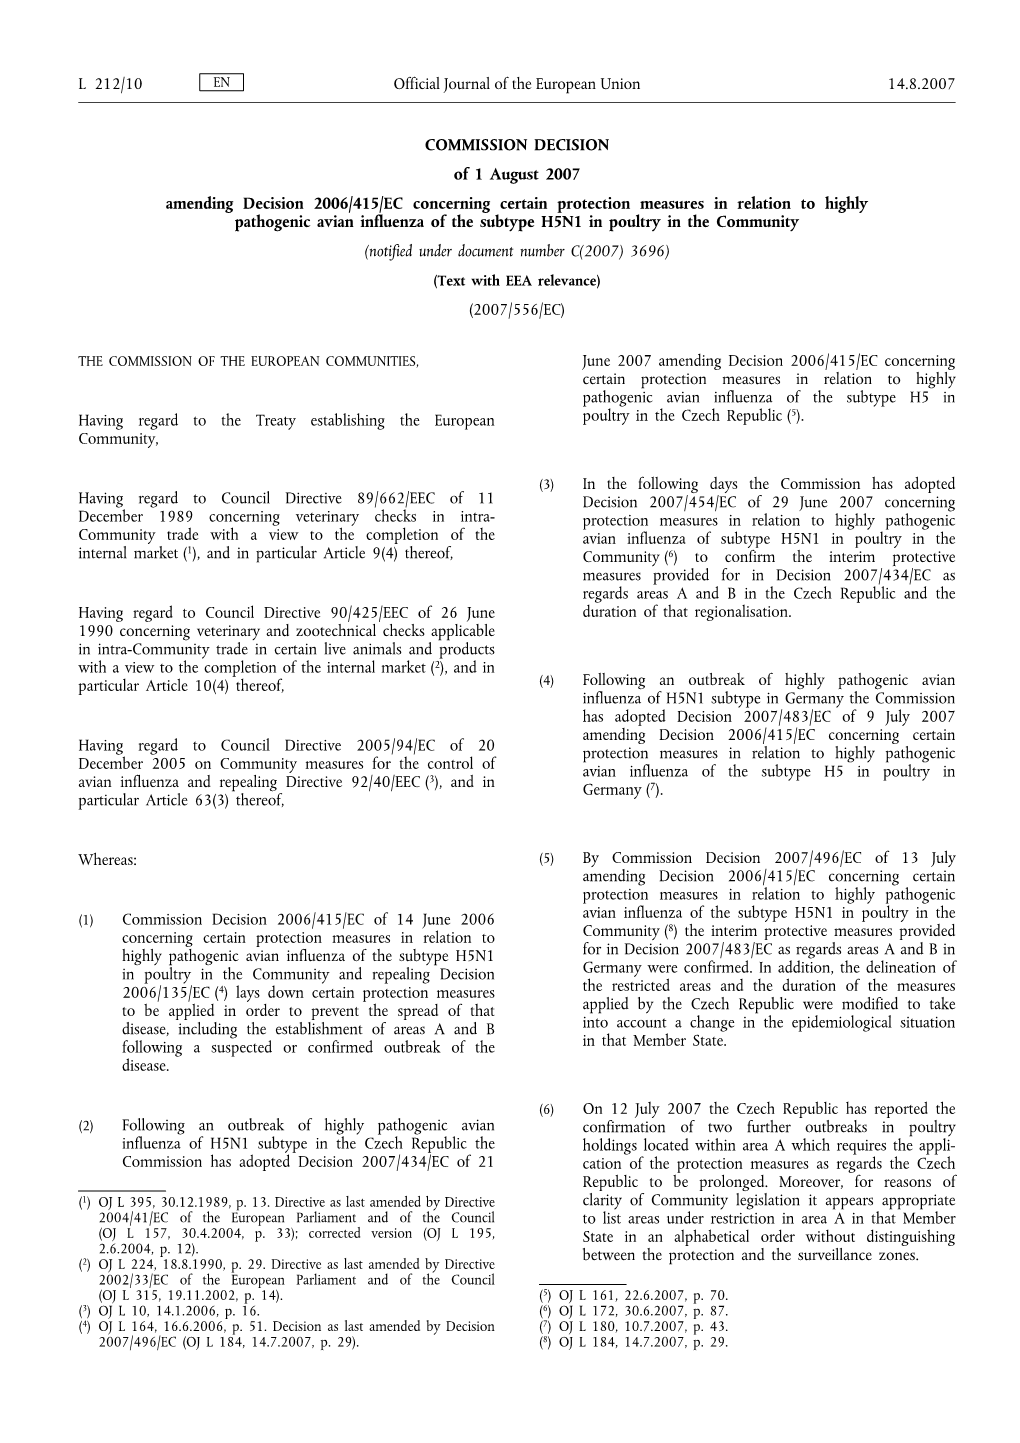 COMMISSION DECISION of 1 August 2007 Amending Decision 2006/415